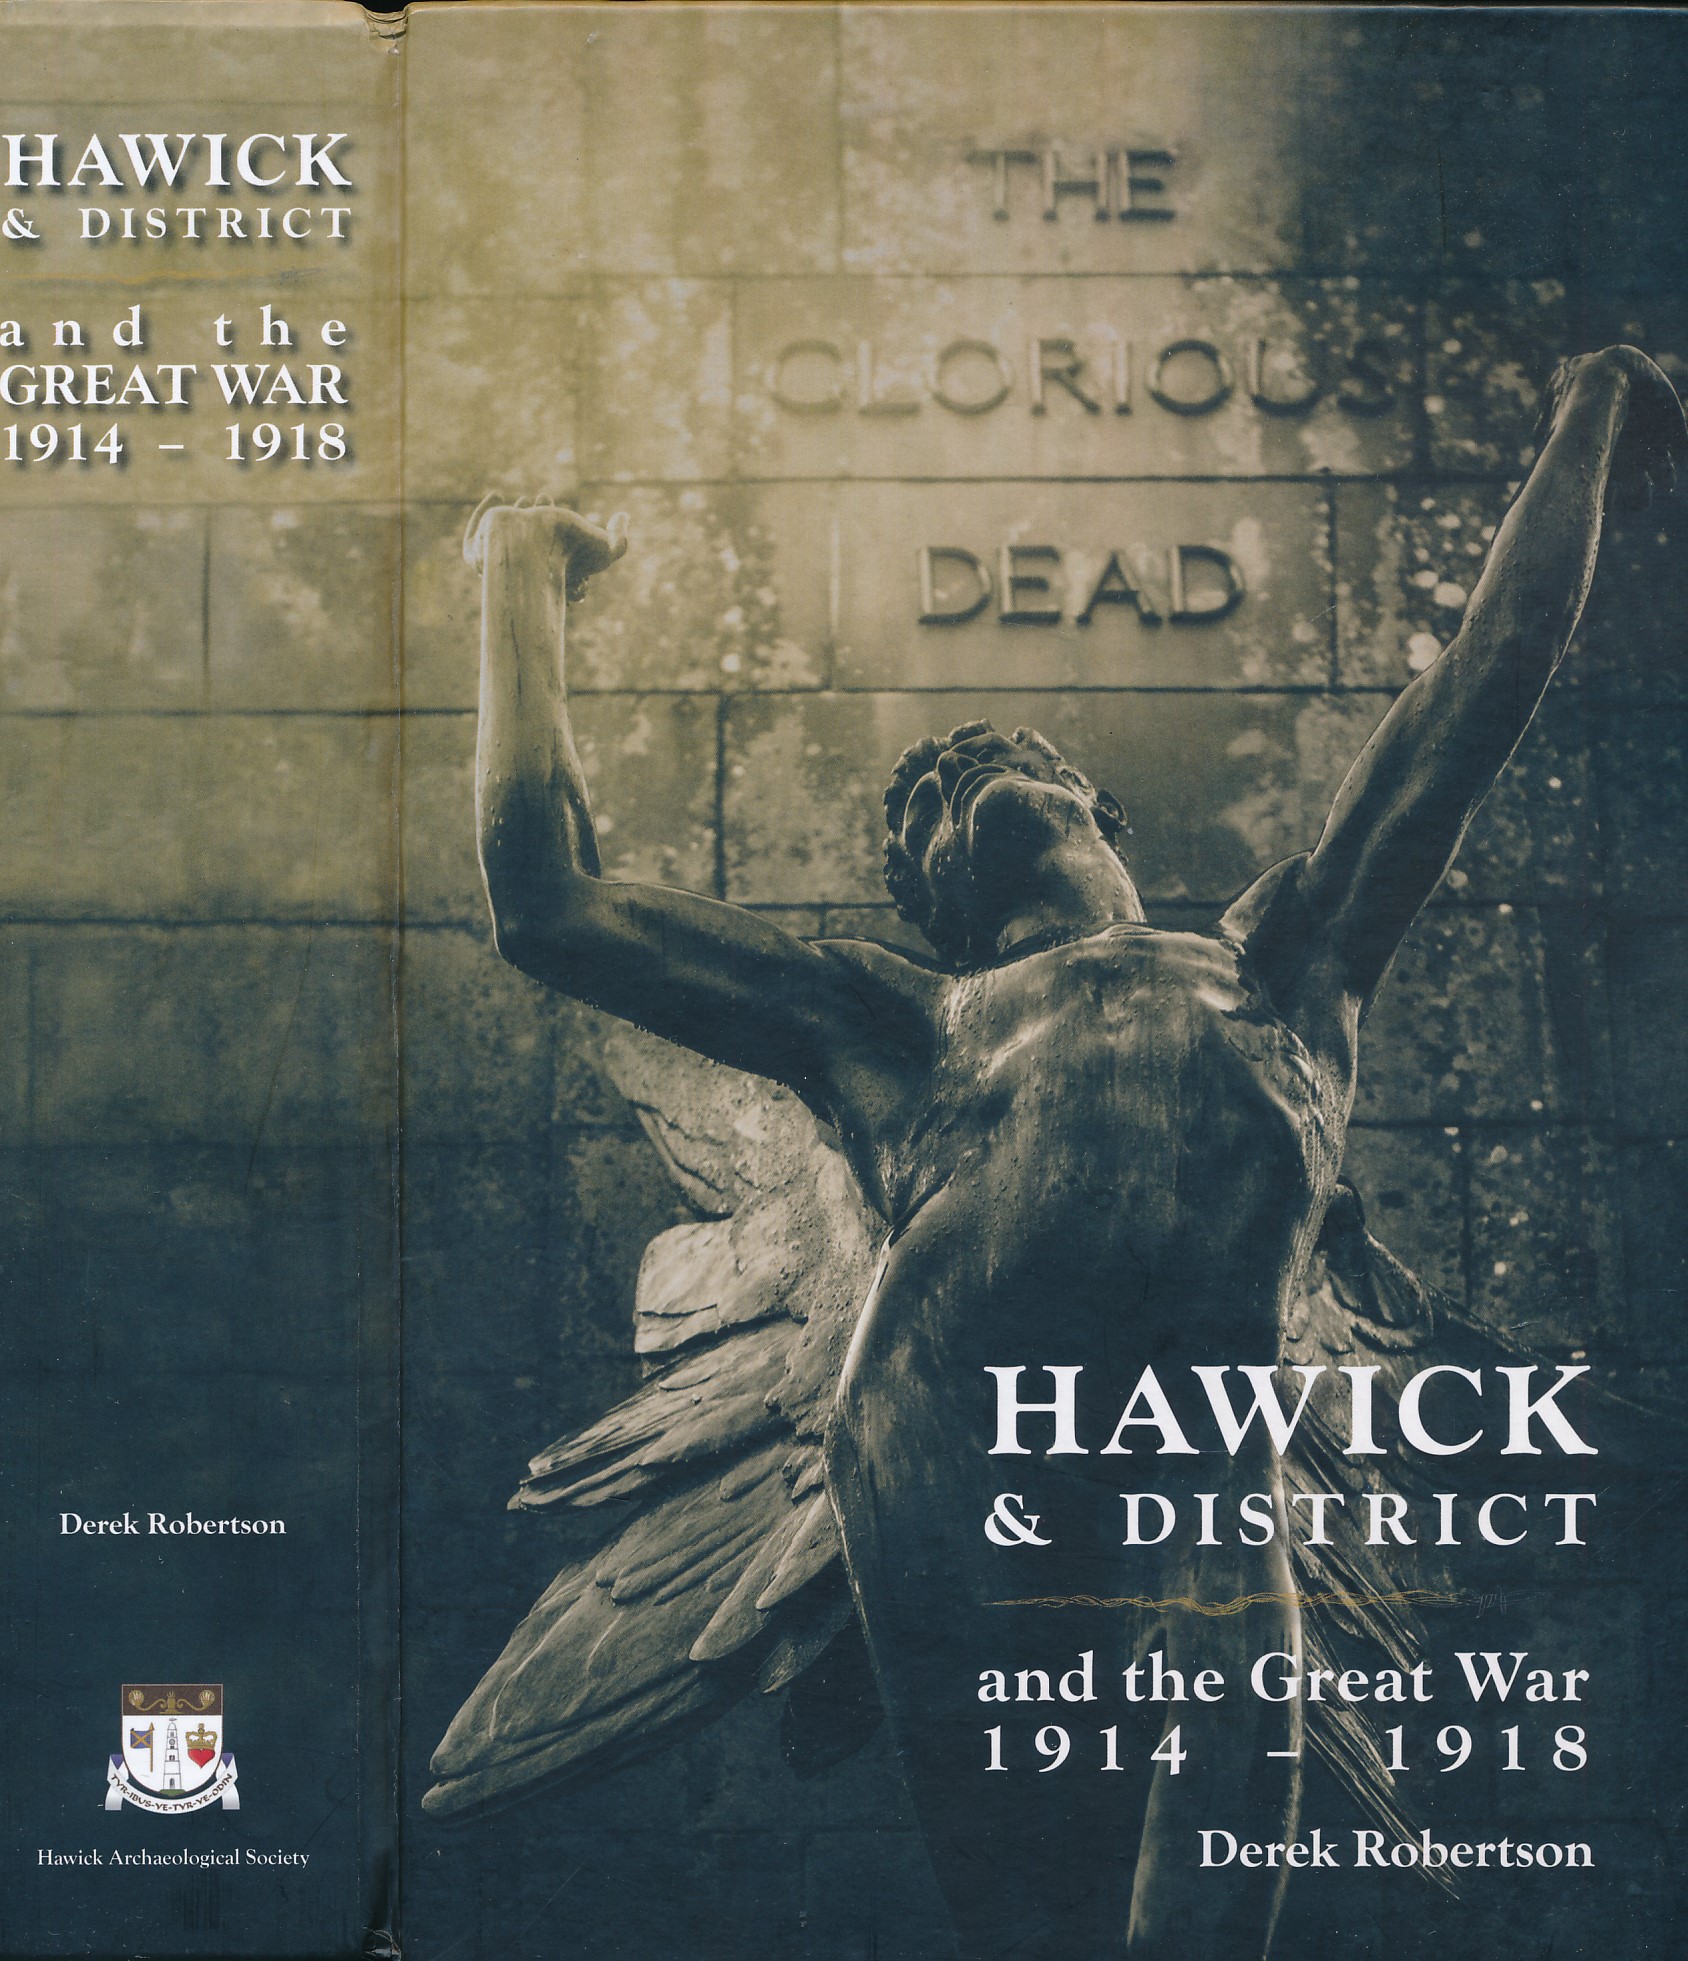 ROBERTSON, DEREK - Hawick District and the Great War 1914 - 1918